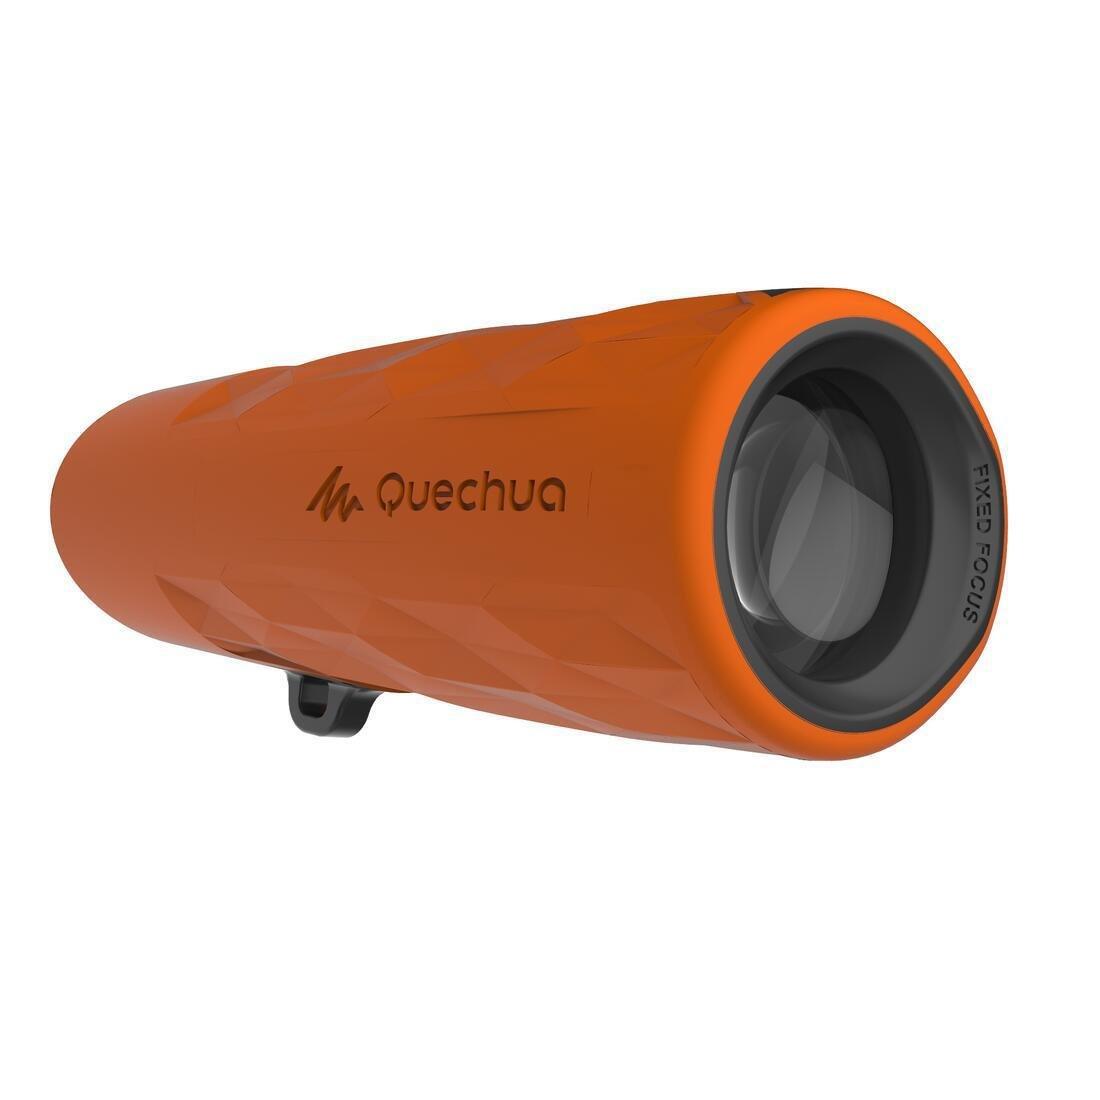 QUECHUA - Unisex Kids Fixed Focus Monocular - Magnification X6, Grey